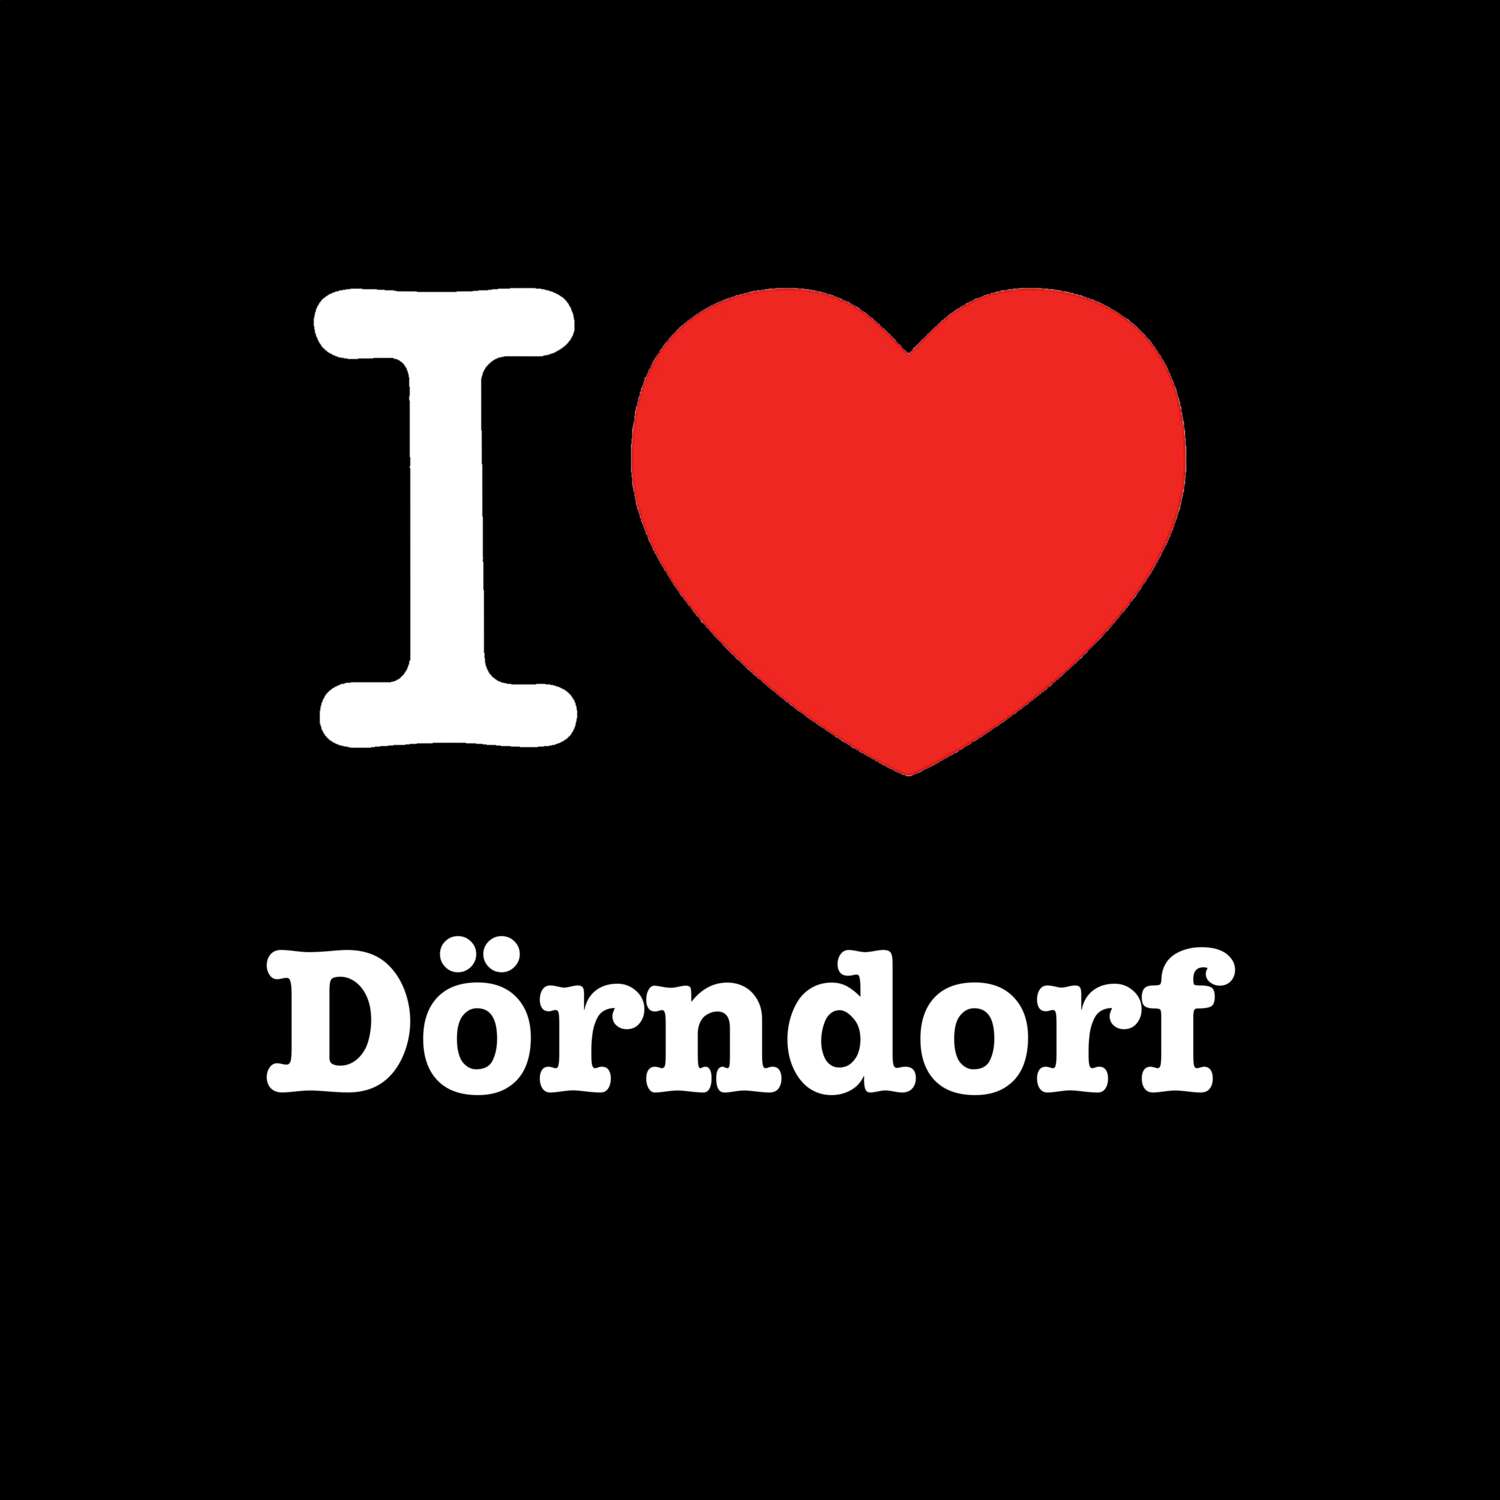 Dörndorf T-Shirt »I love«